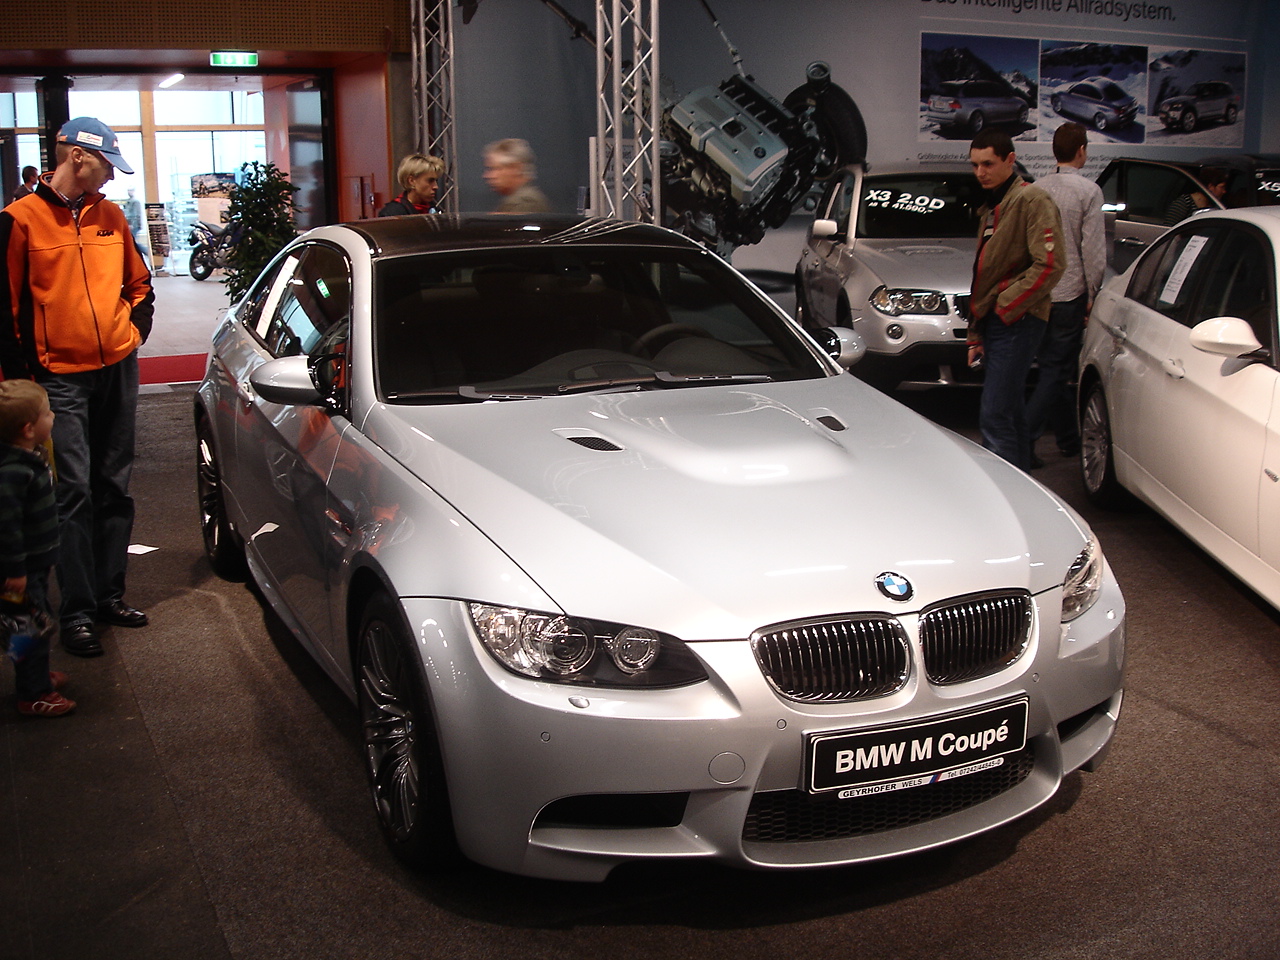 BMW Serie 3 - Wikipedia, la enciclopedia libre